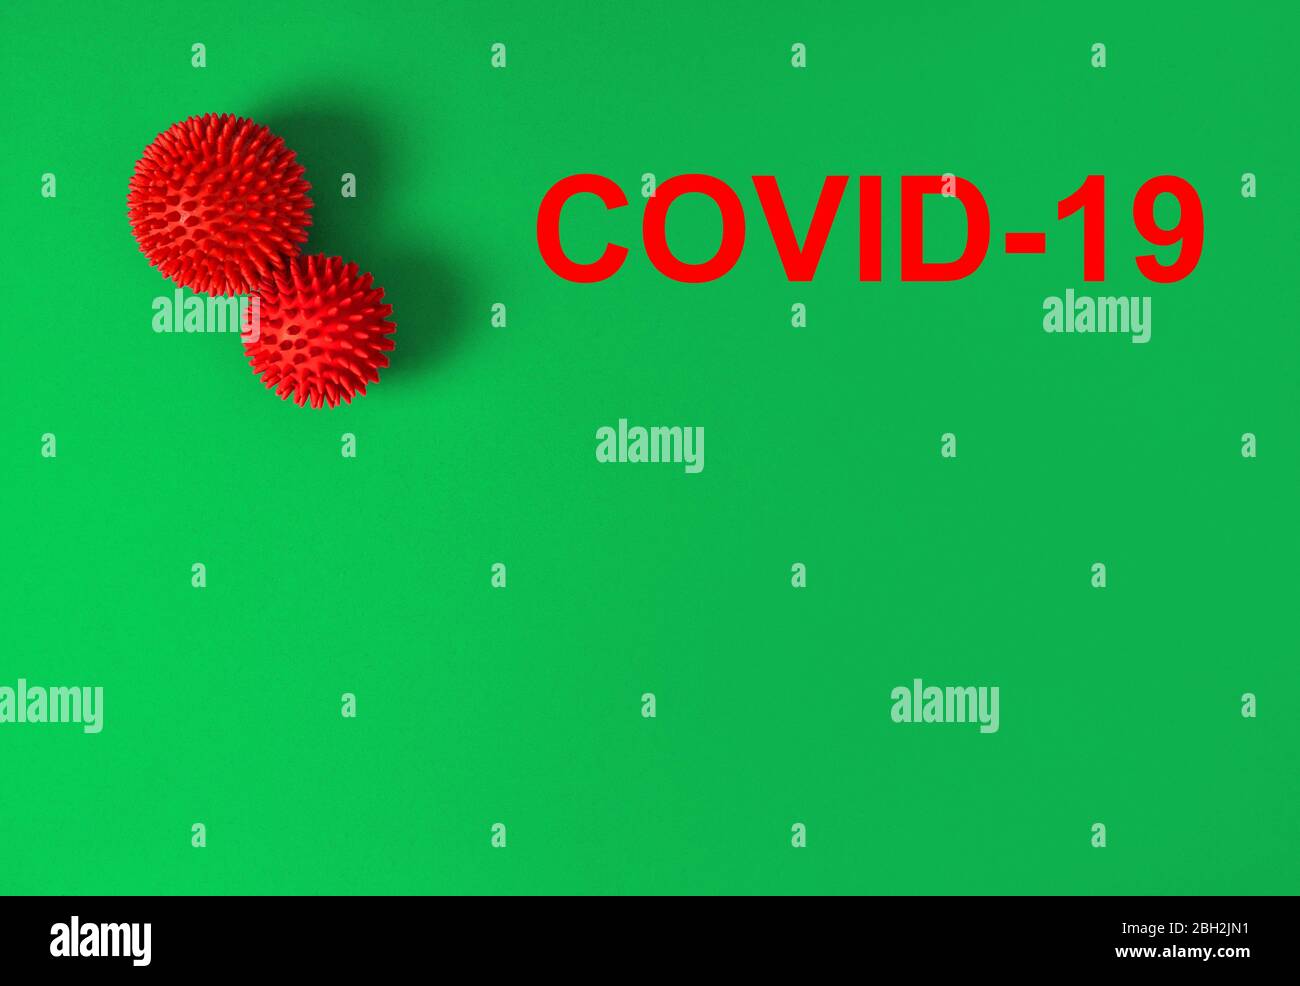 Corona virus covid-19. Epidemic. Pandemic concept green background Stock Photo